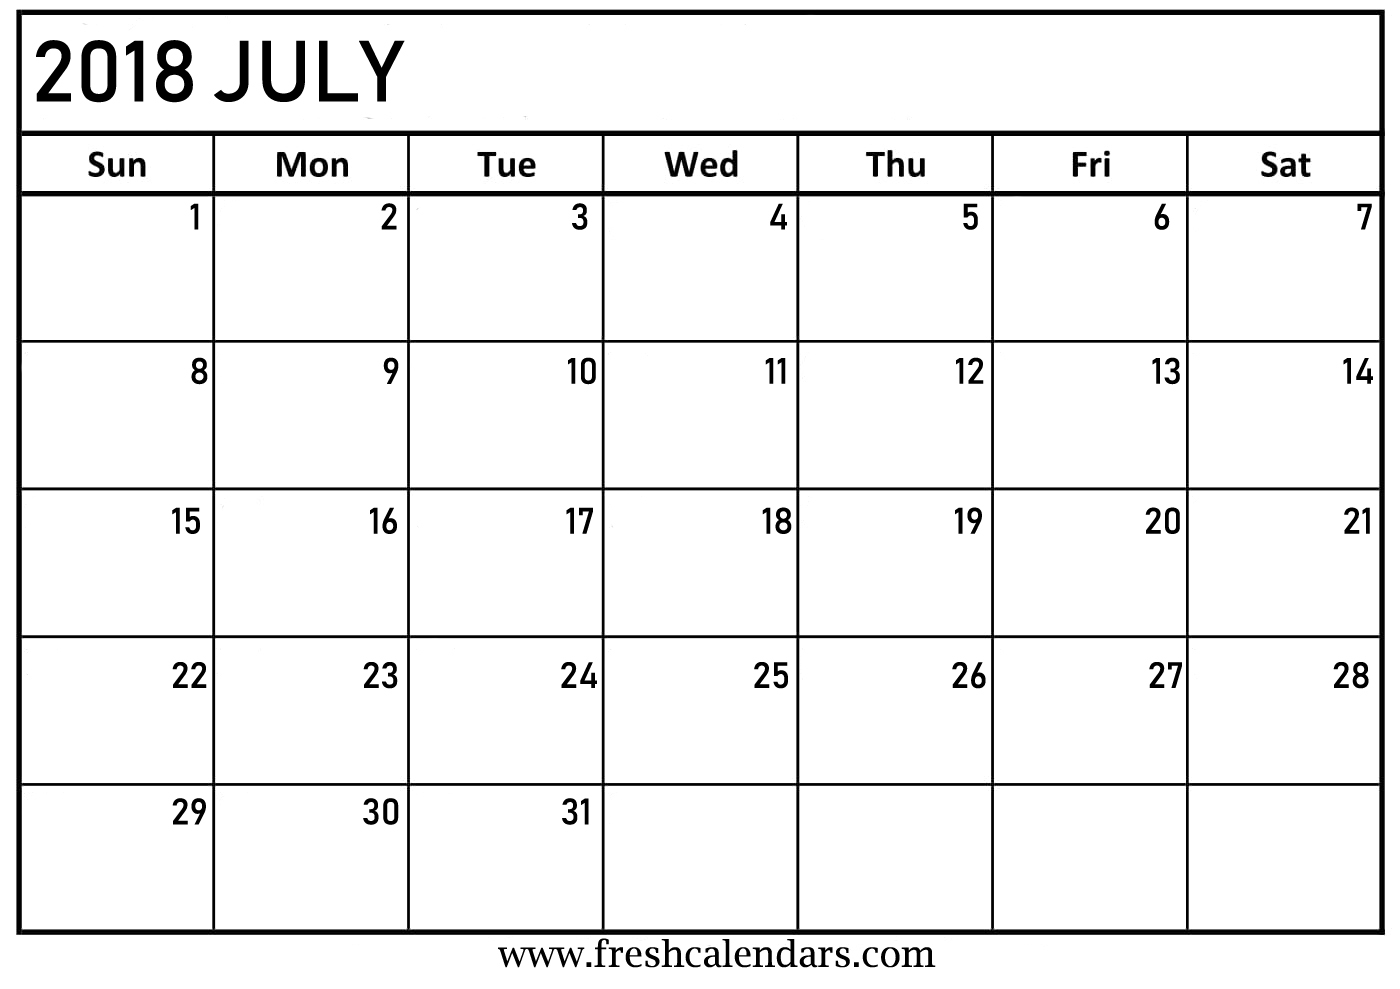 free 5 july 2018 calendar printable template source free 5 july 2018